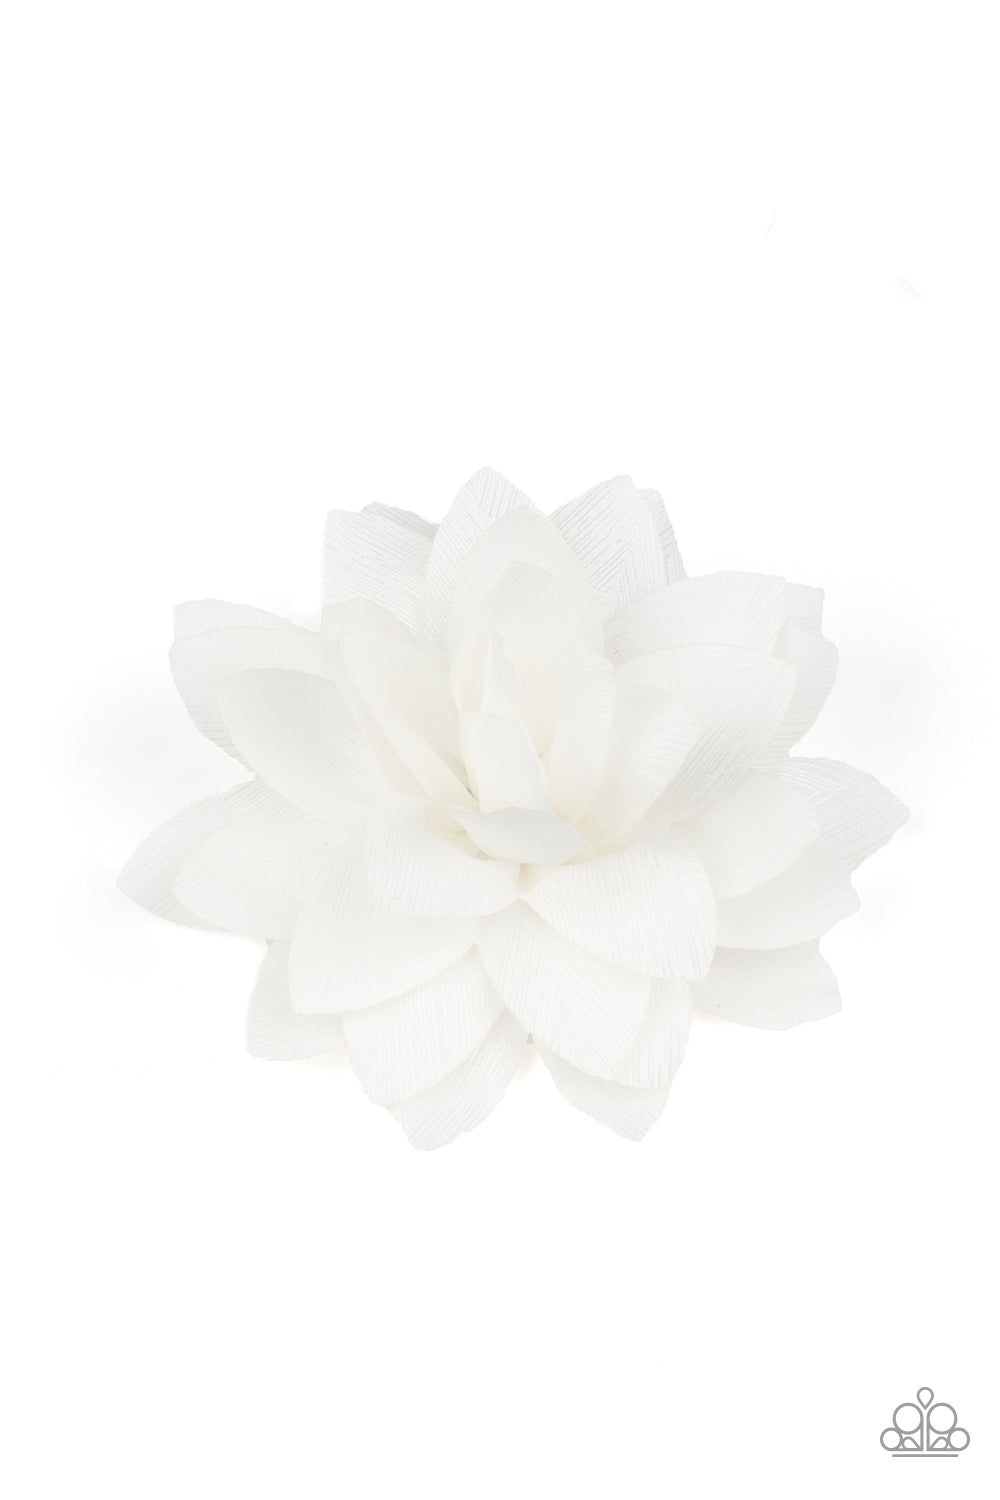 &lt;P&gt; Flecked in shimmer, silky white petals bloom into an elegant blossom. Features a standard hair clip on the back. &lt;/P&gt;

&lt;P&gt;&lt;I&gt;Sold as one individual hair clip.  &lt;/I&gt;&lt;/P&gt;


&lt;img src=\&quot;https://d9b54x484lq62.cloudfront.net/paparazzi/shopping/images/517_tag150x115_1.png\&quot; alt=\&quot;New Kit\&quot; align=\&quot;middle\&quot; height=\&quot;50\&quot; width=\&quot;50\&quot;/&gt;